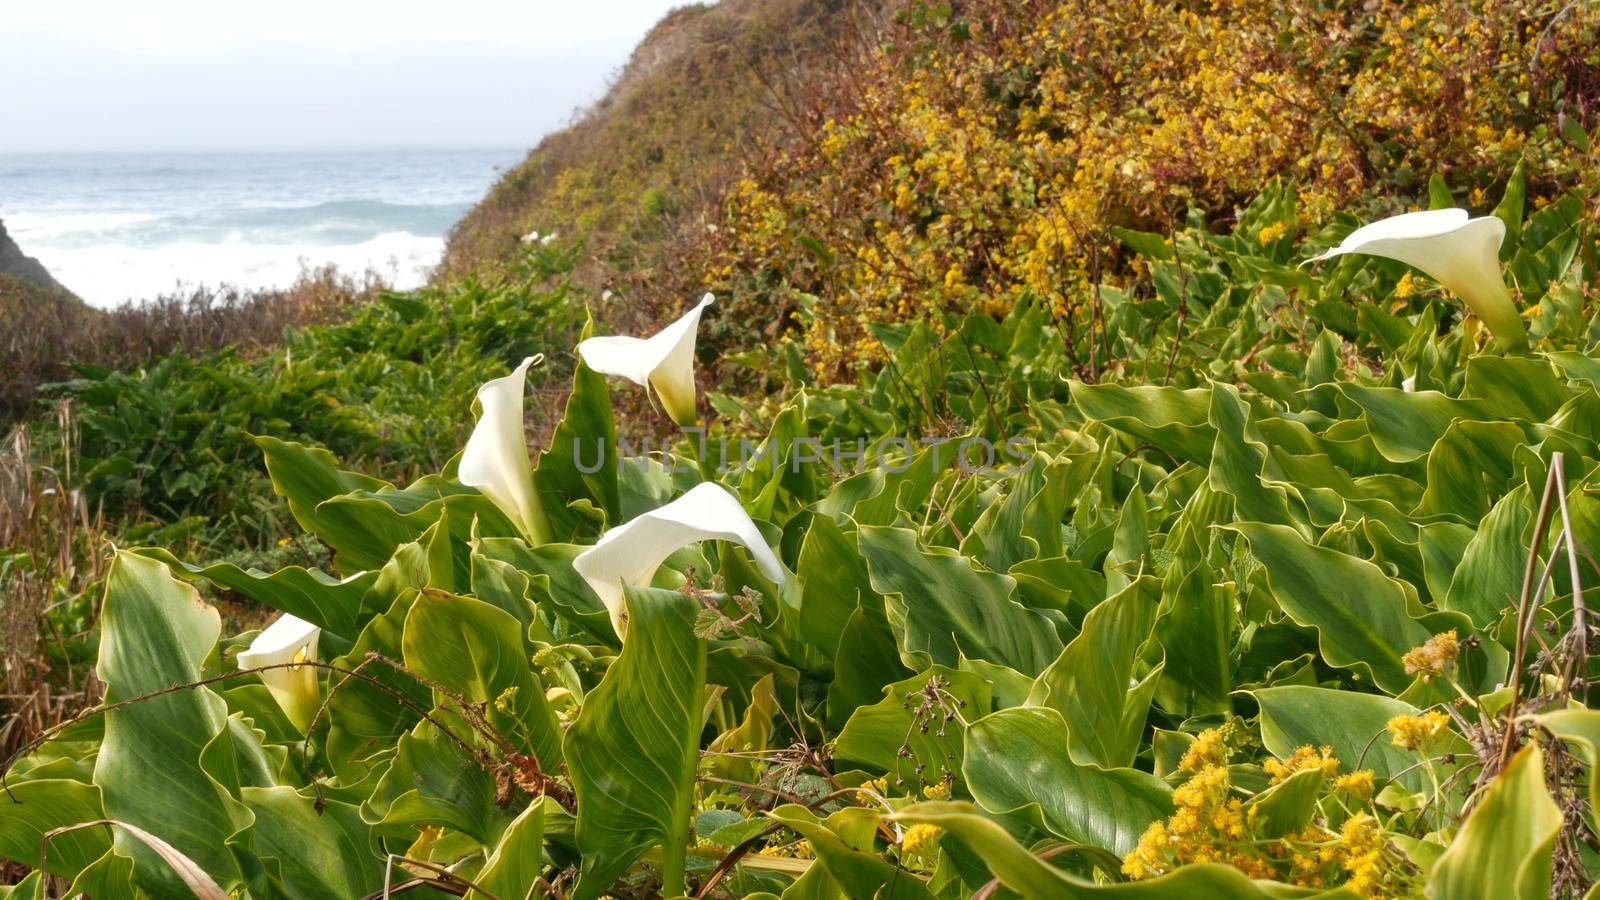 Calla lily valley, Garrapata beach, Big Sur white flower, California ocean coast by DogoraSun